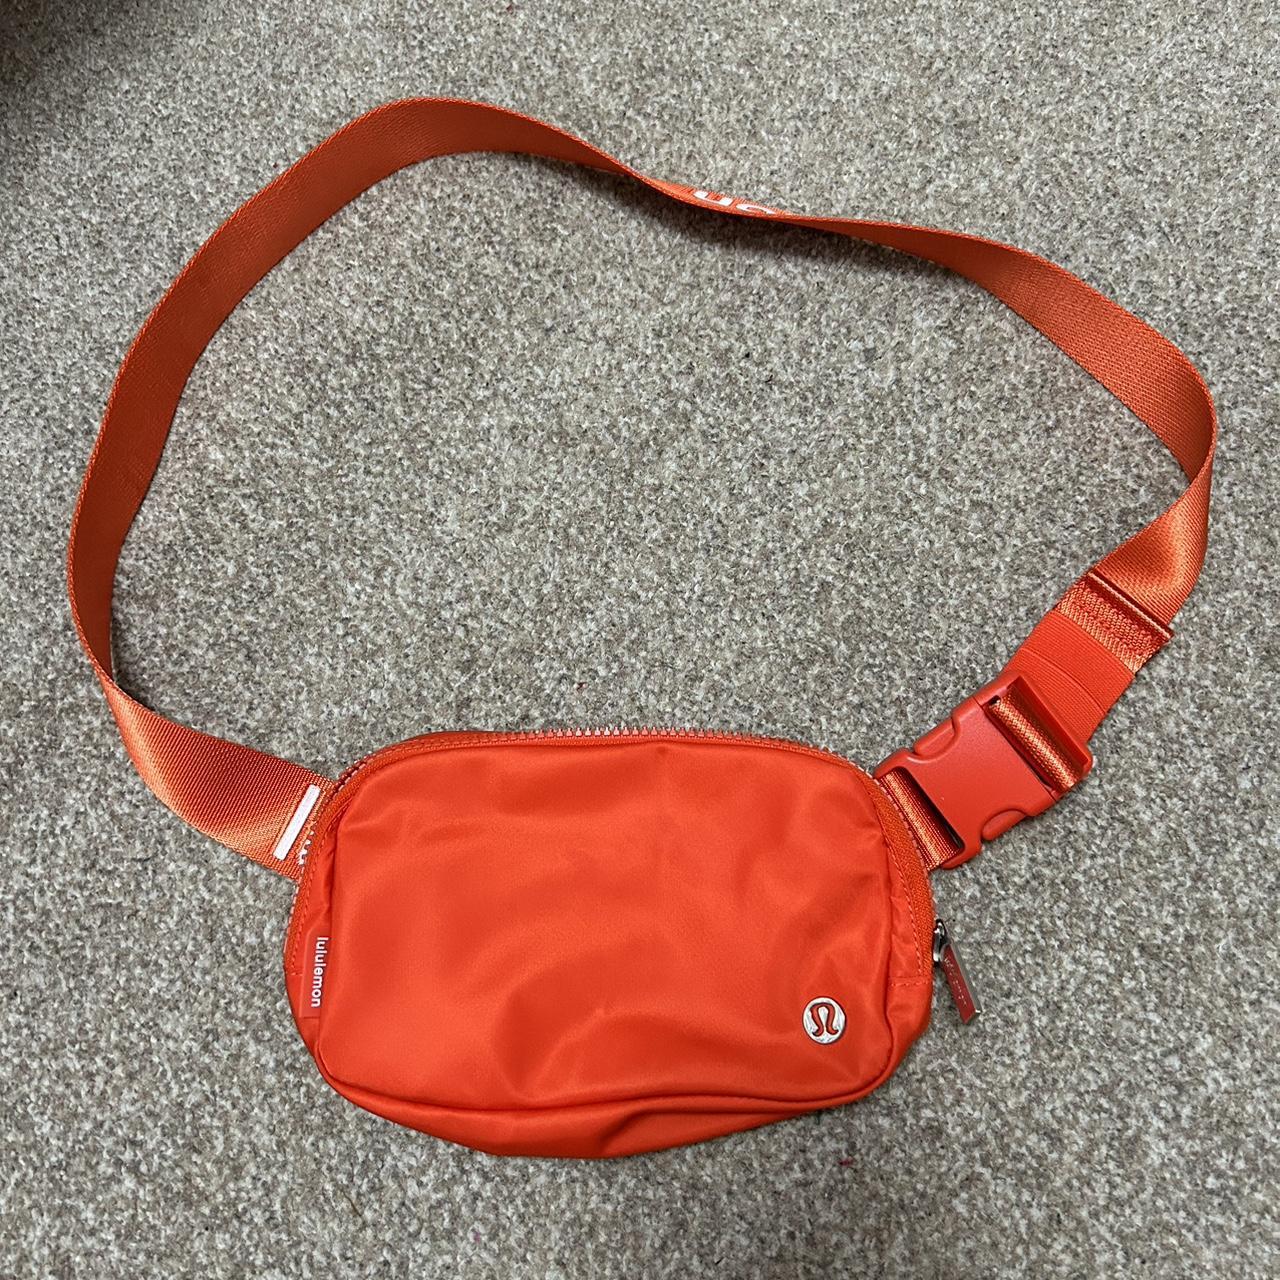 Lululemon Women's Orange Bag | Depop